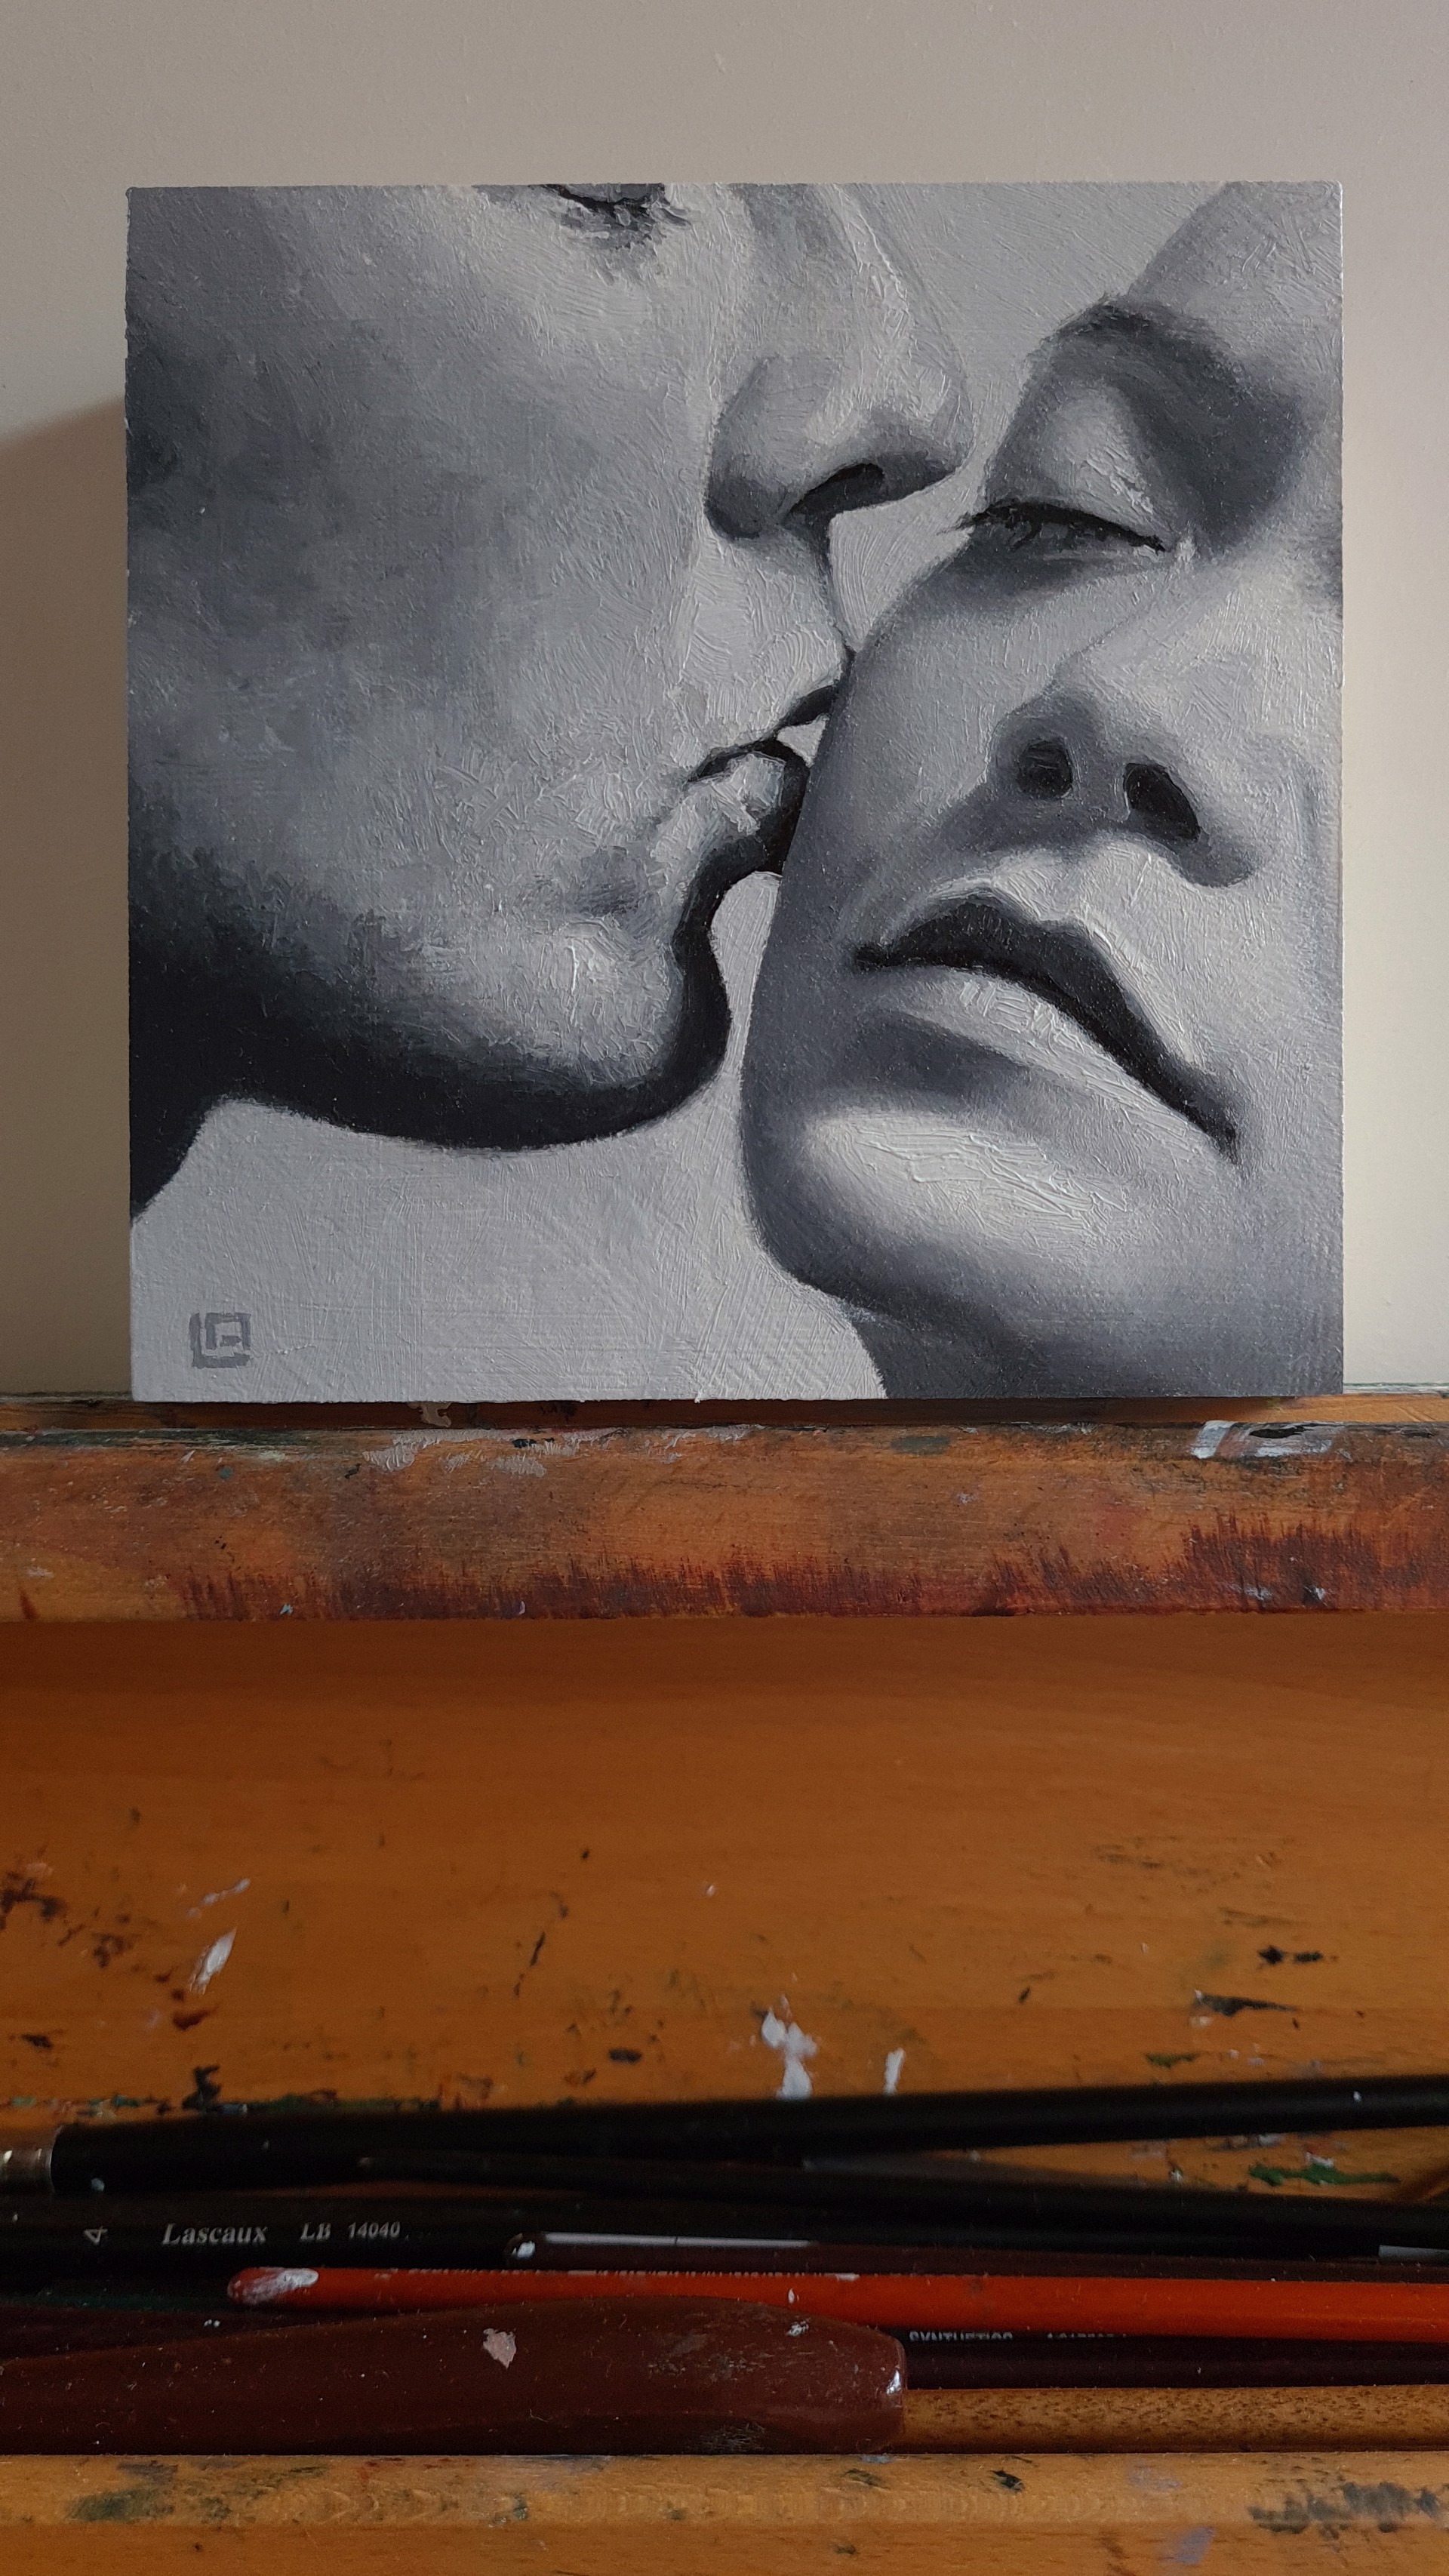 The Kiss #1 by Linda Delahaye